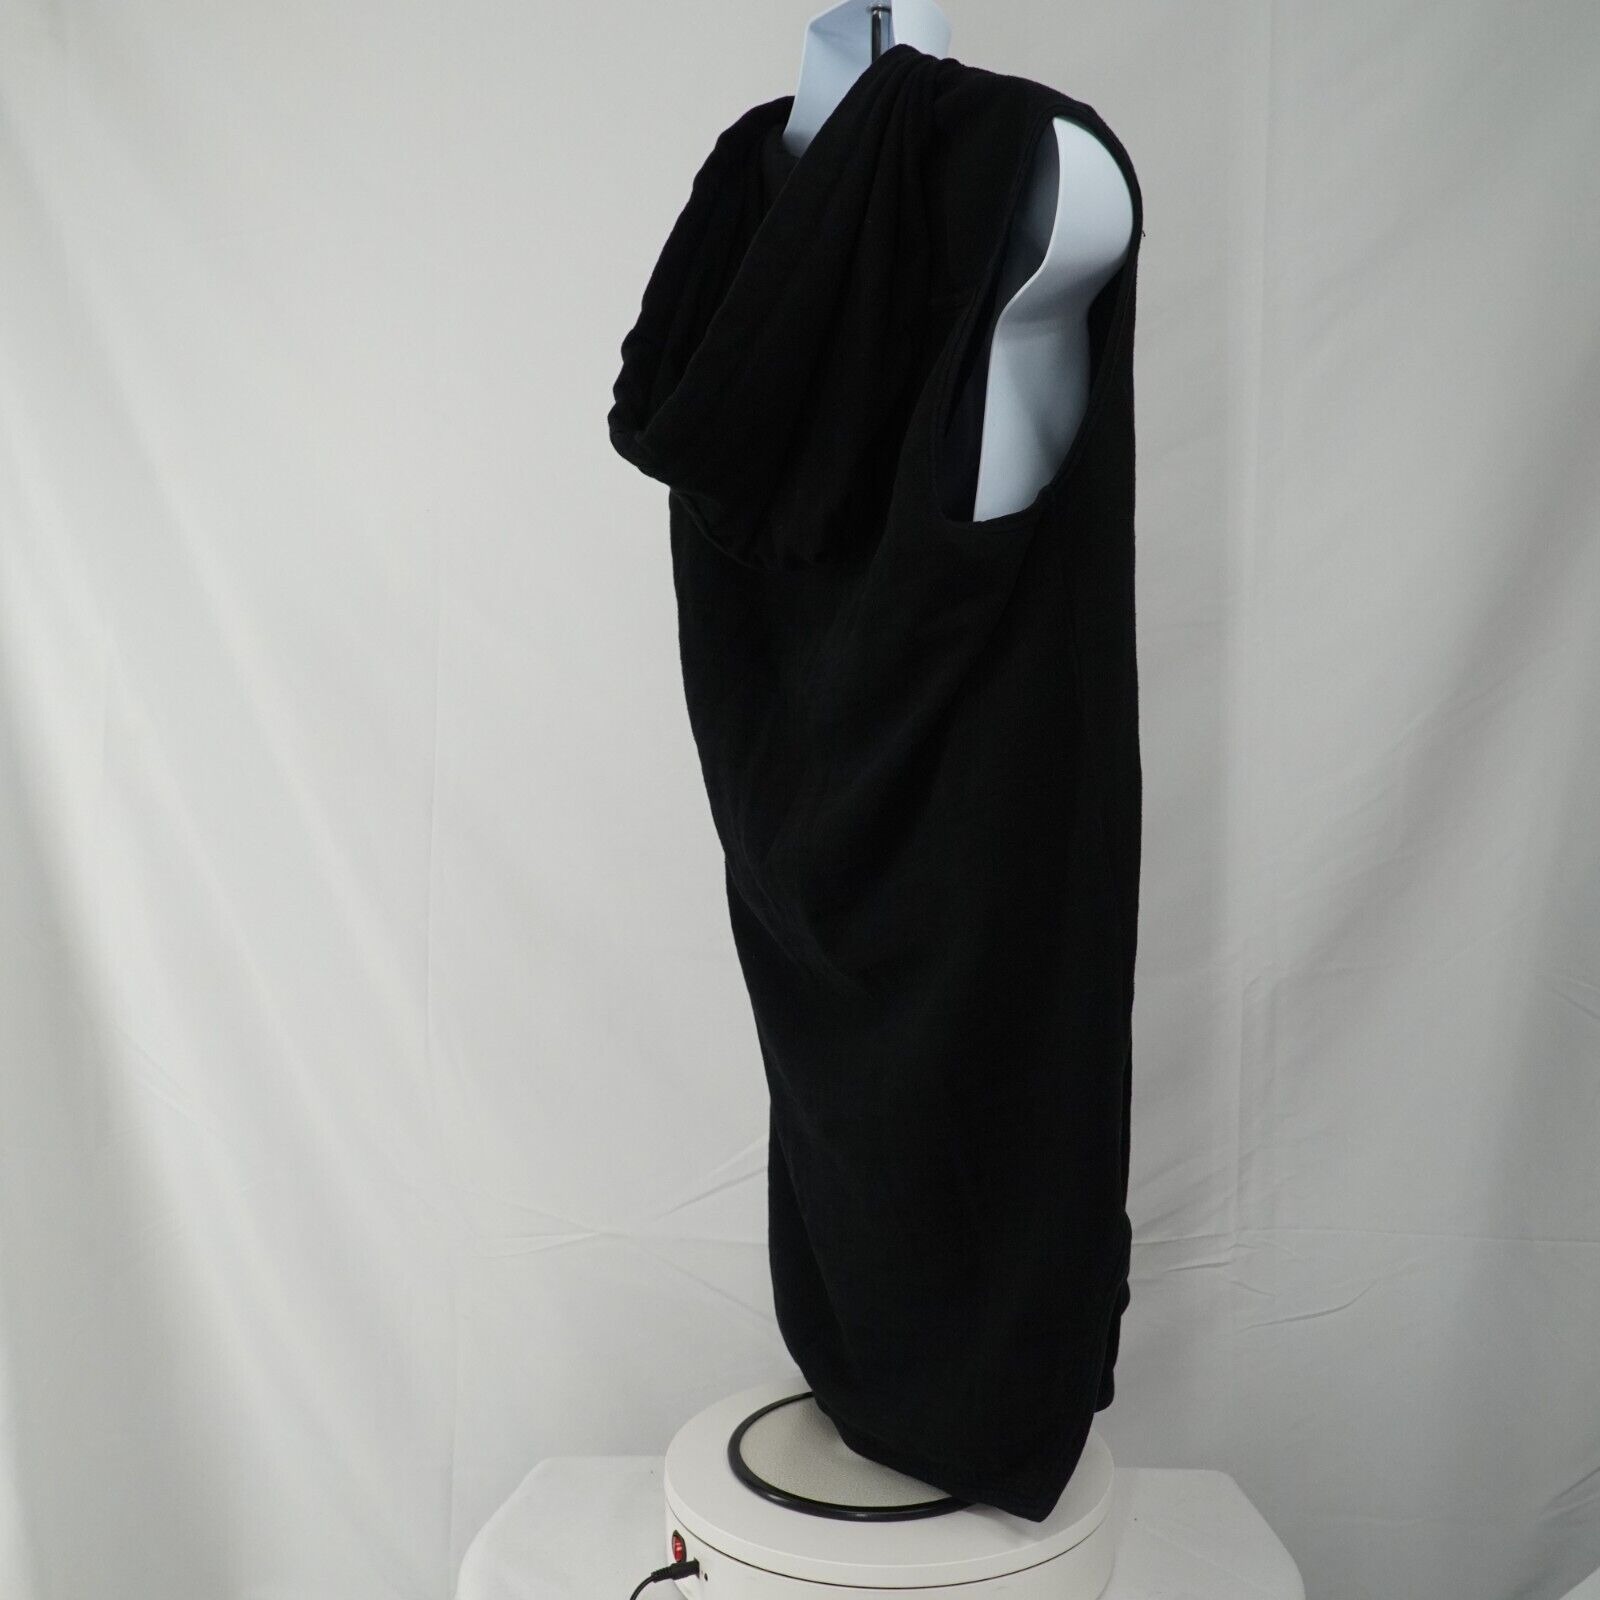 Black Zip Up Sleeveless Jacket Hoodie Cotton - Medium - 17